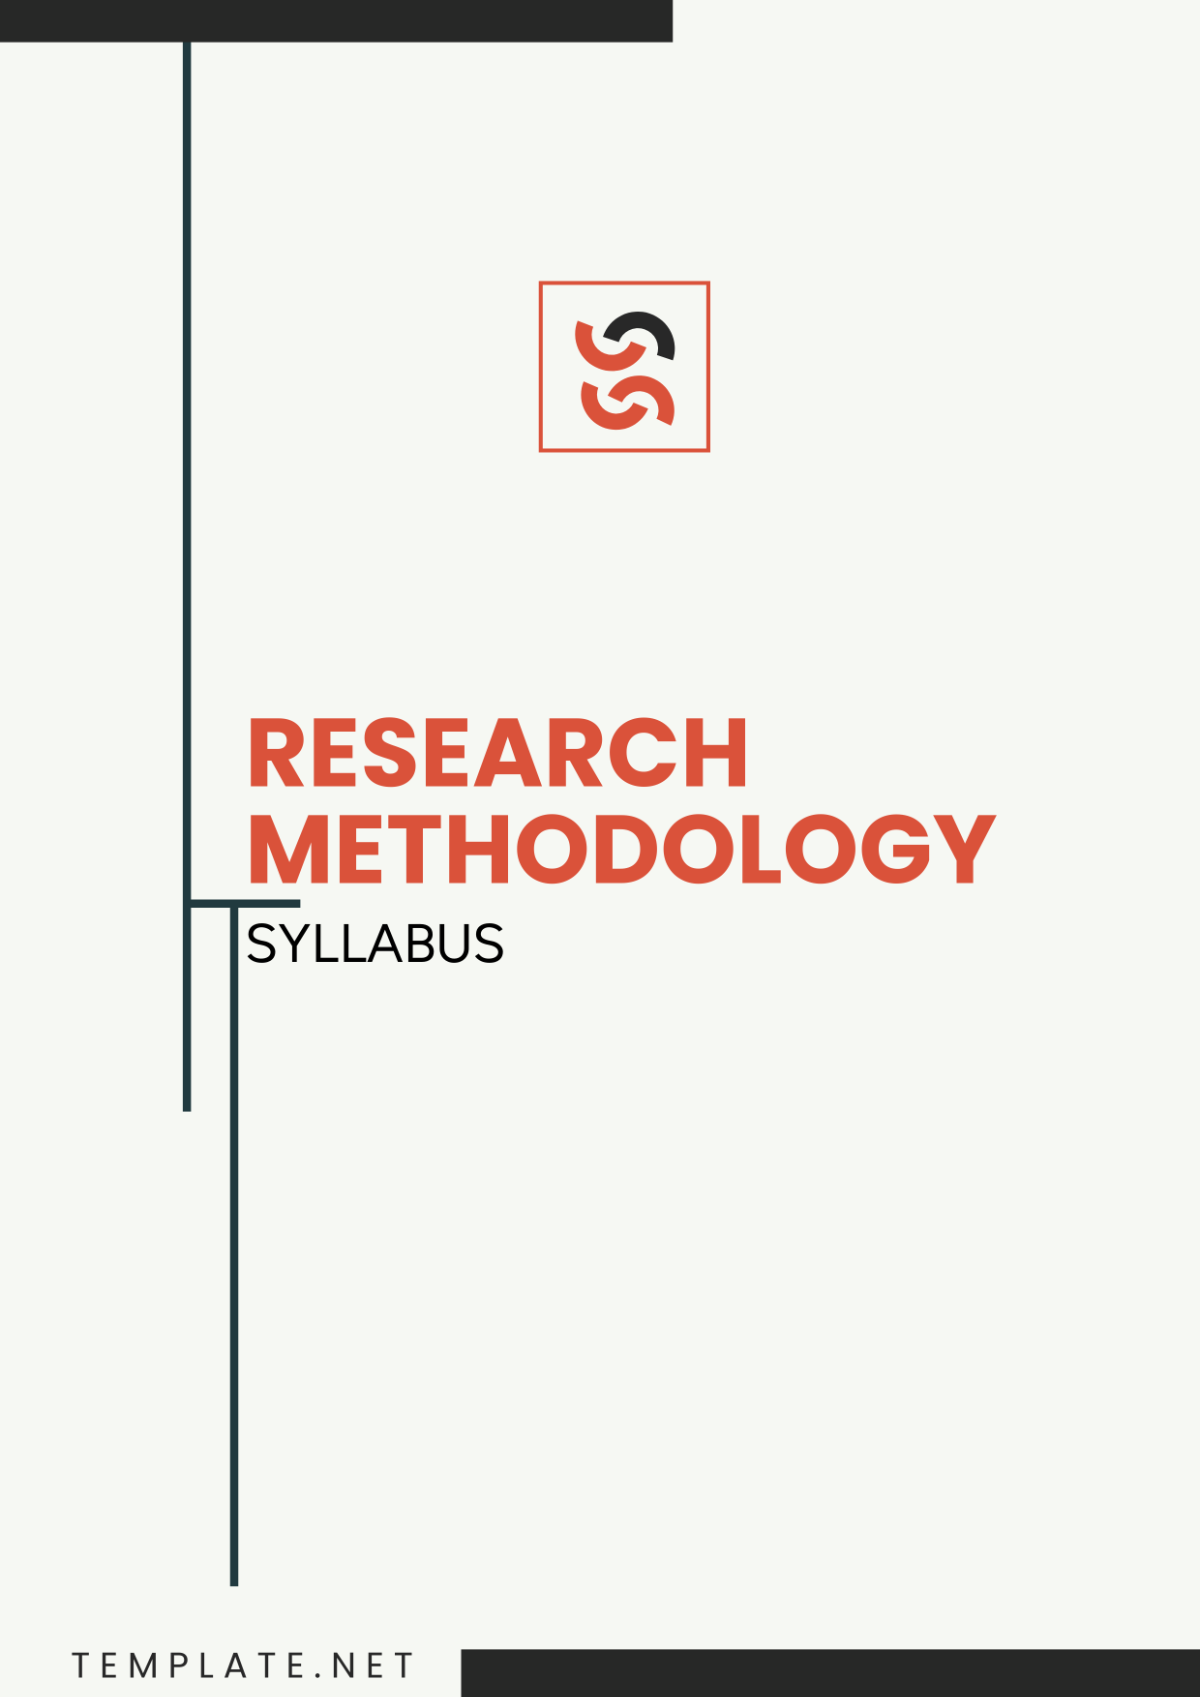 Research Methodology Syllabus Template